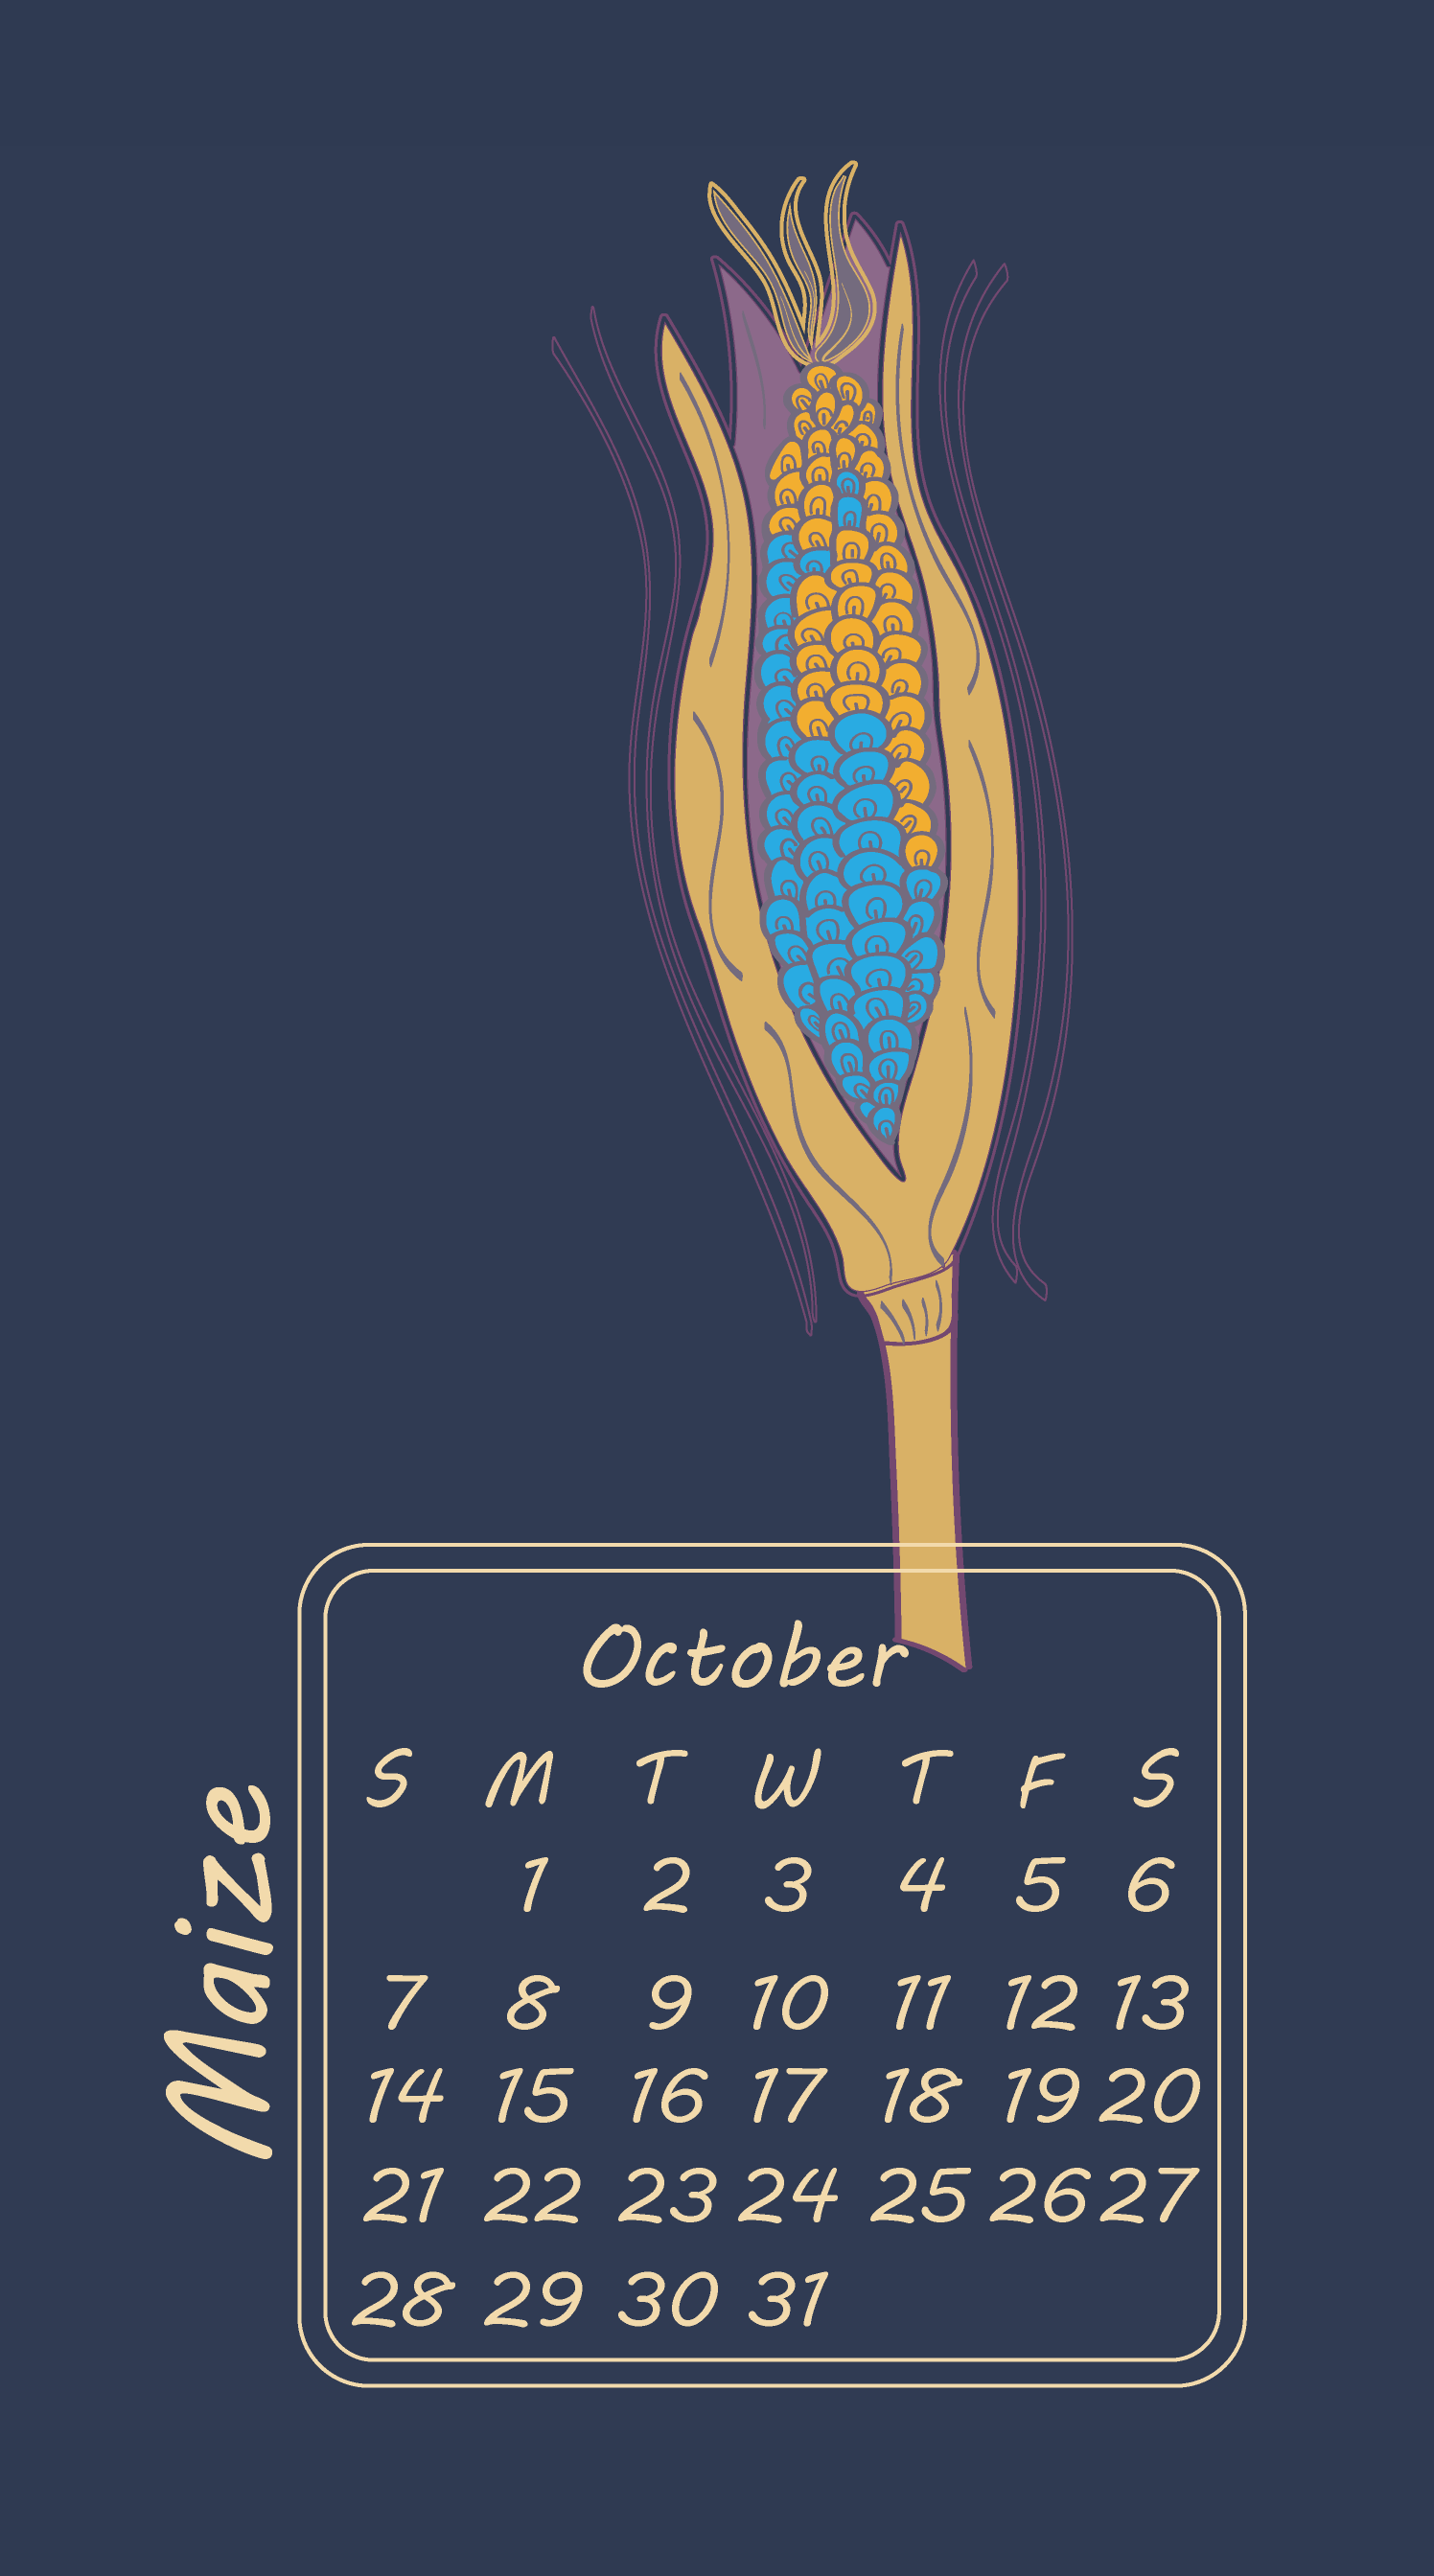 Spoonflower Calendar 2018 - Grains